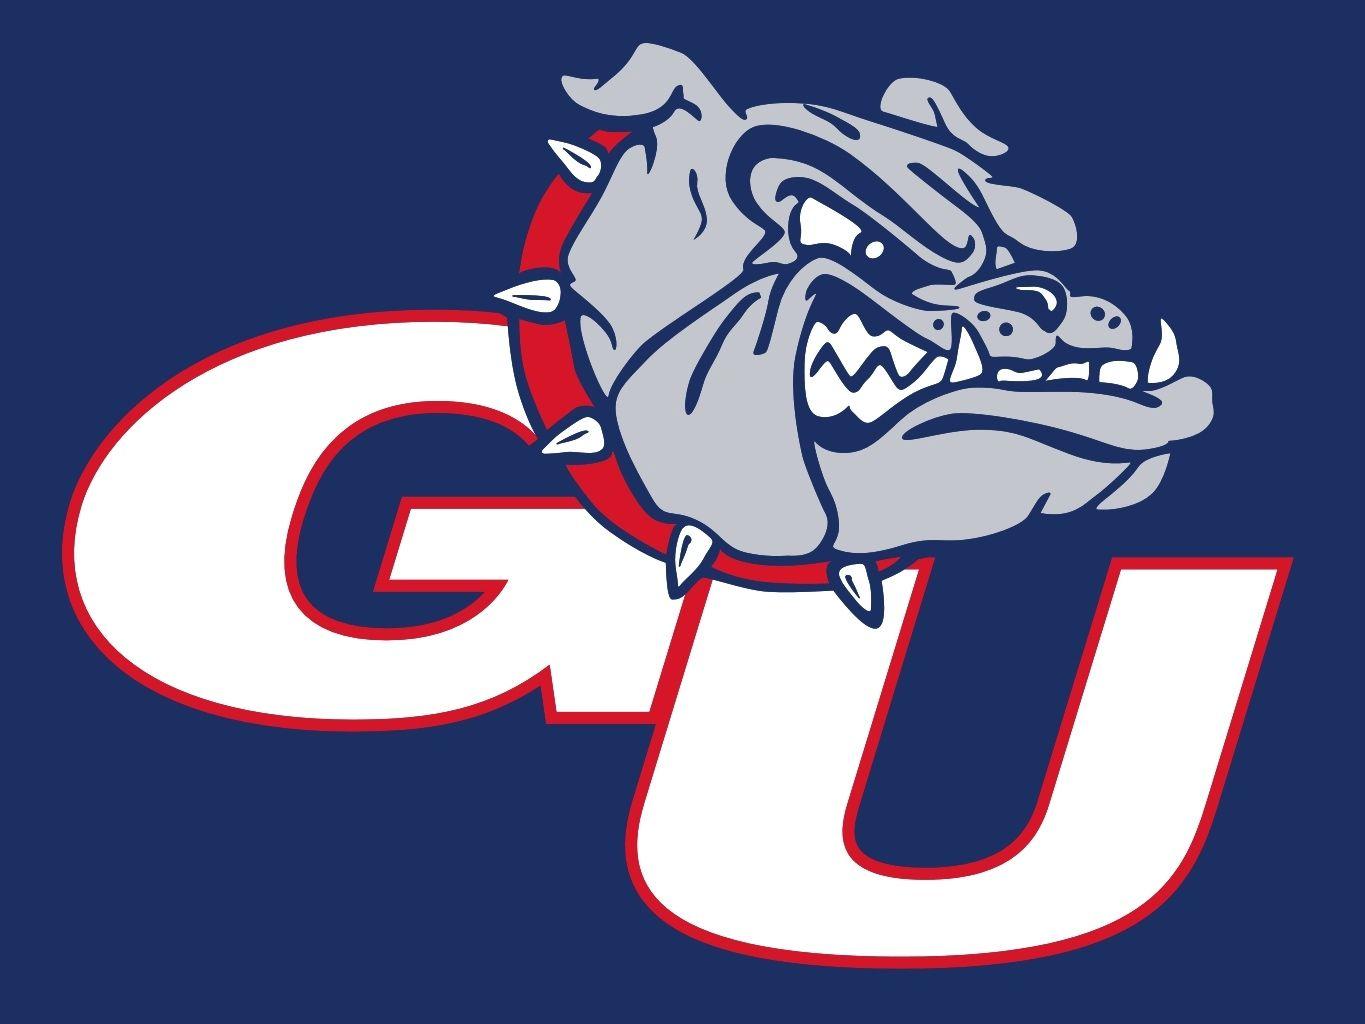 It is home to the Gonzaga University Bulldogs basketball program